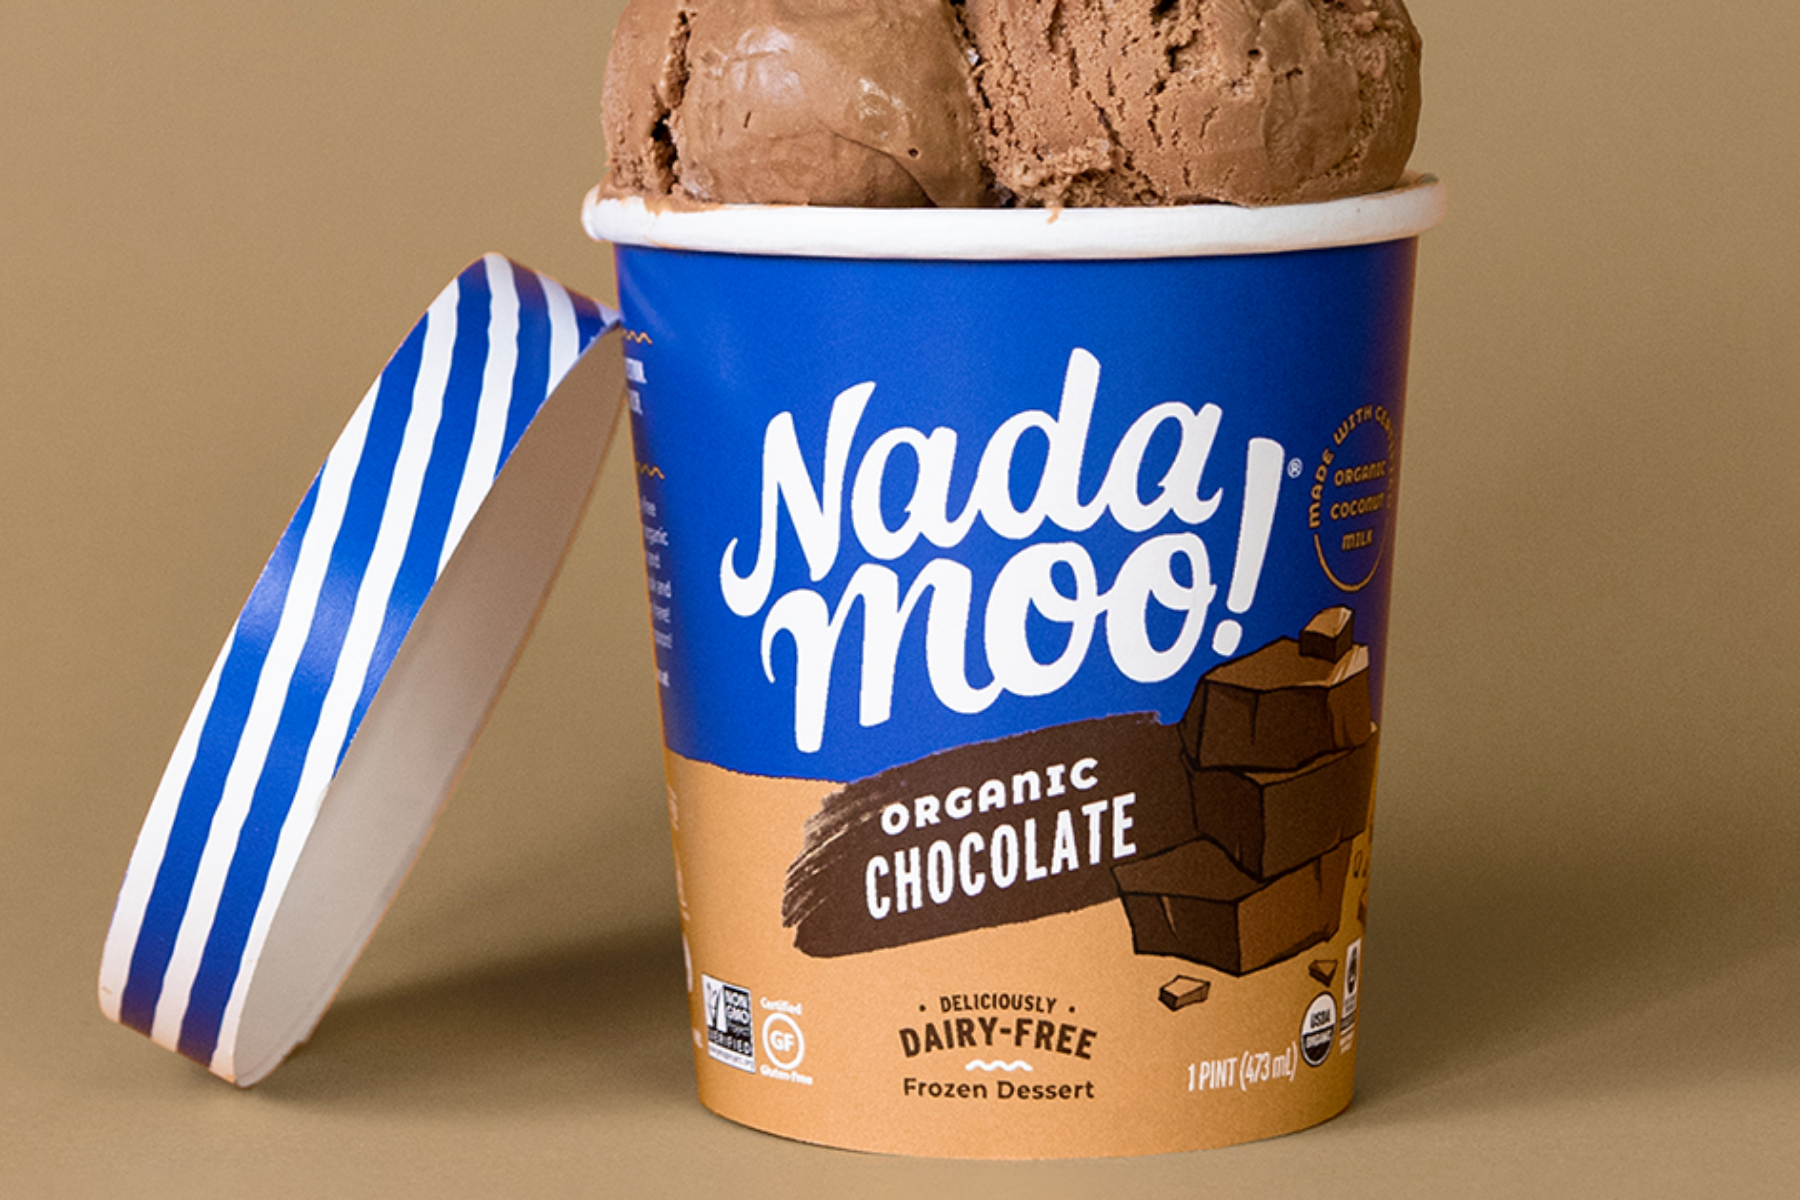 Scoops of vegan chocolate ice cream atop a pint of NadaMoo! Organic Chocolate ice cream